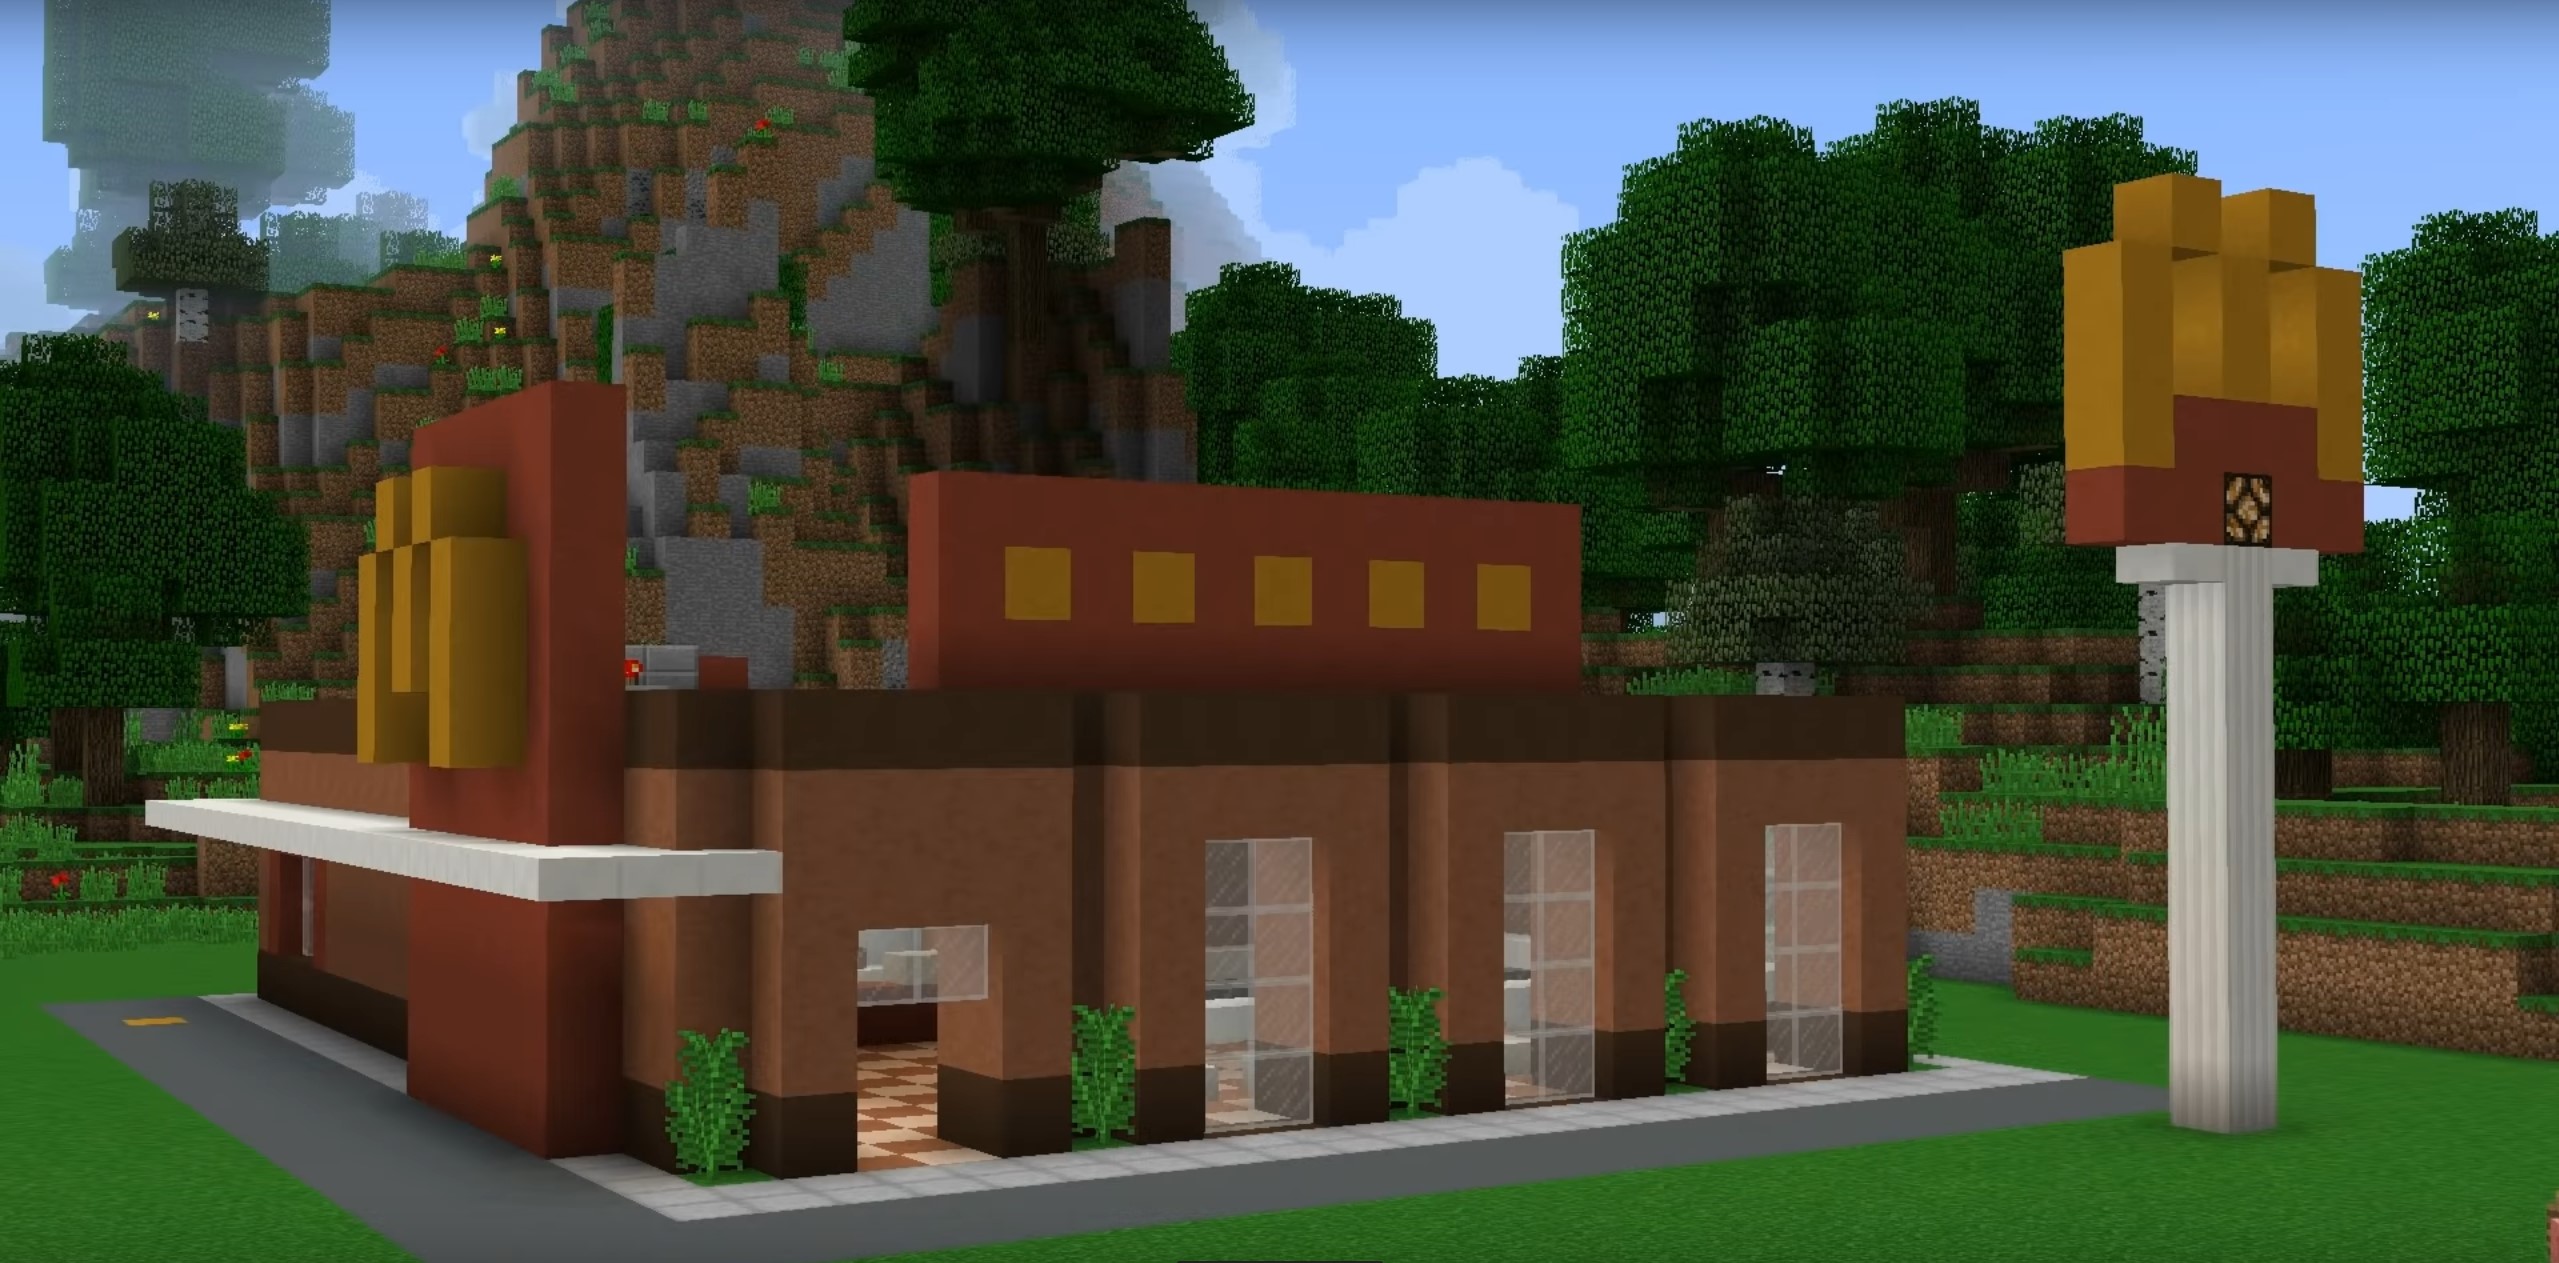 Minecraft McDonald's idea